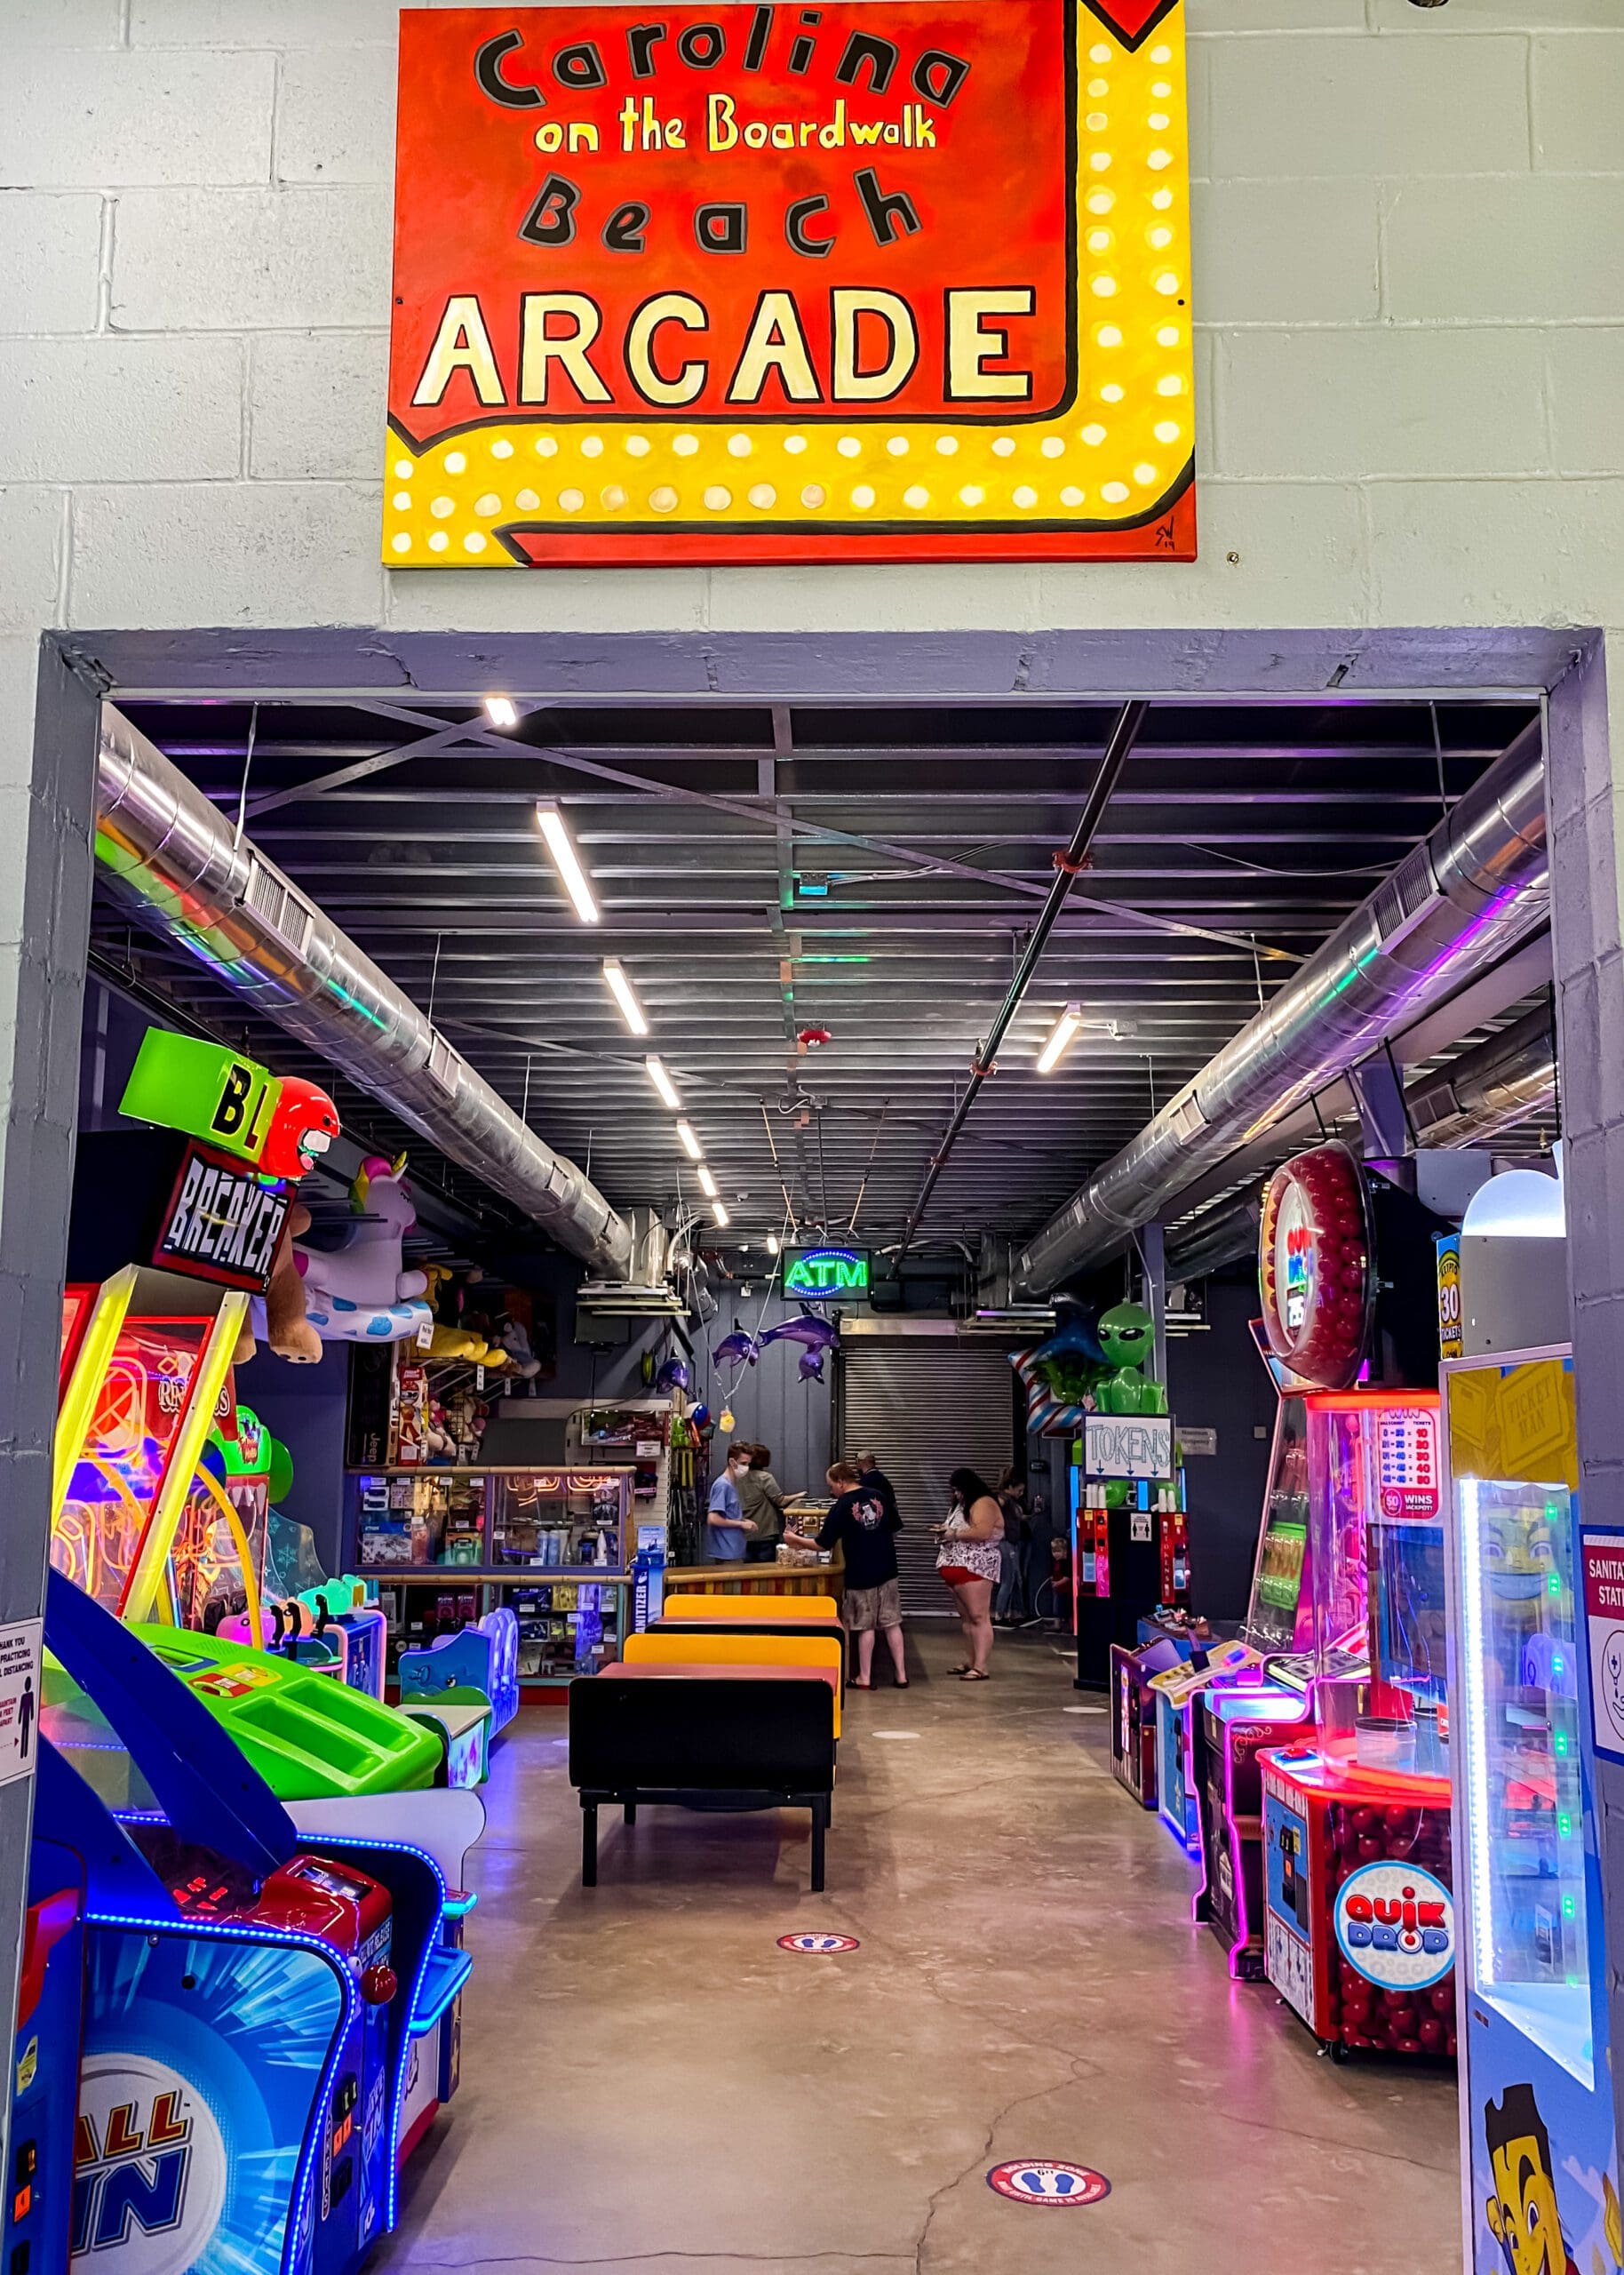 Carolina Beach Arcade